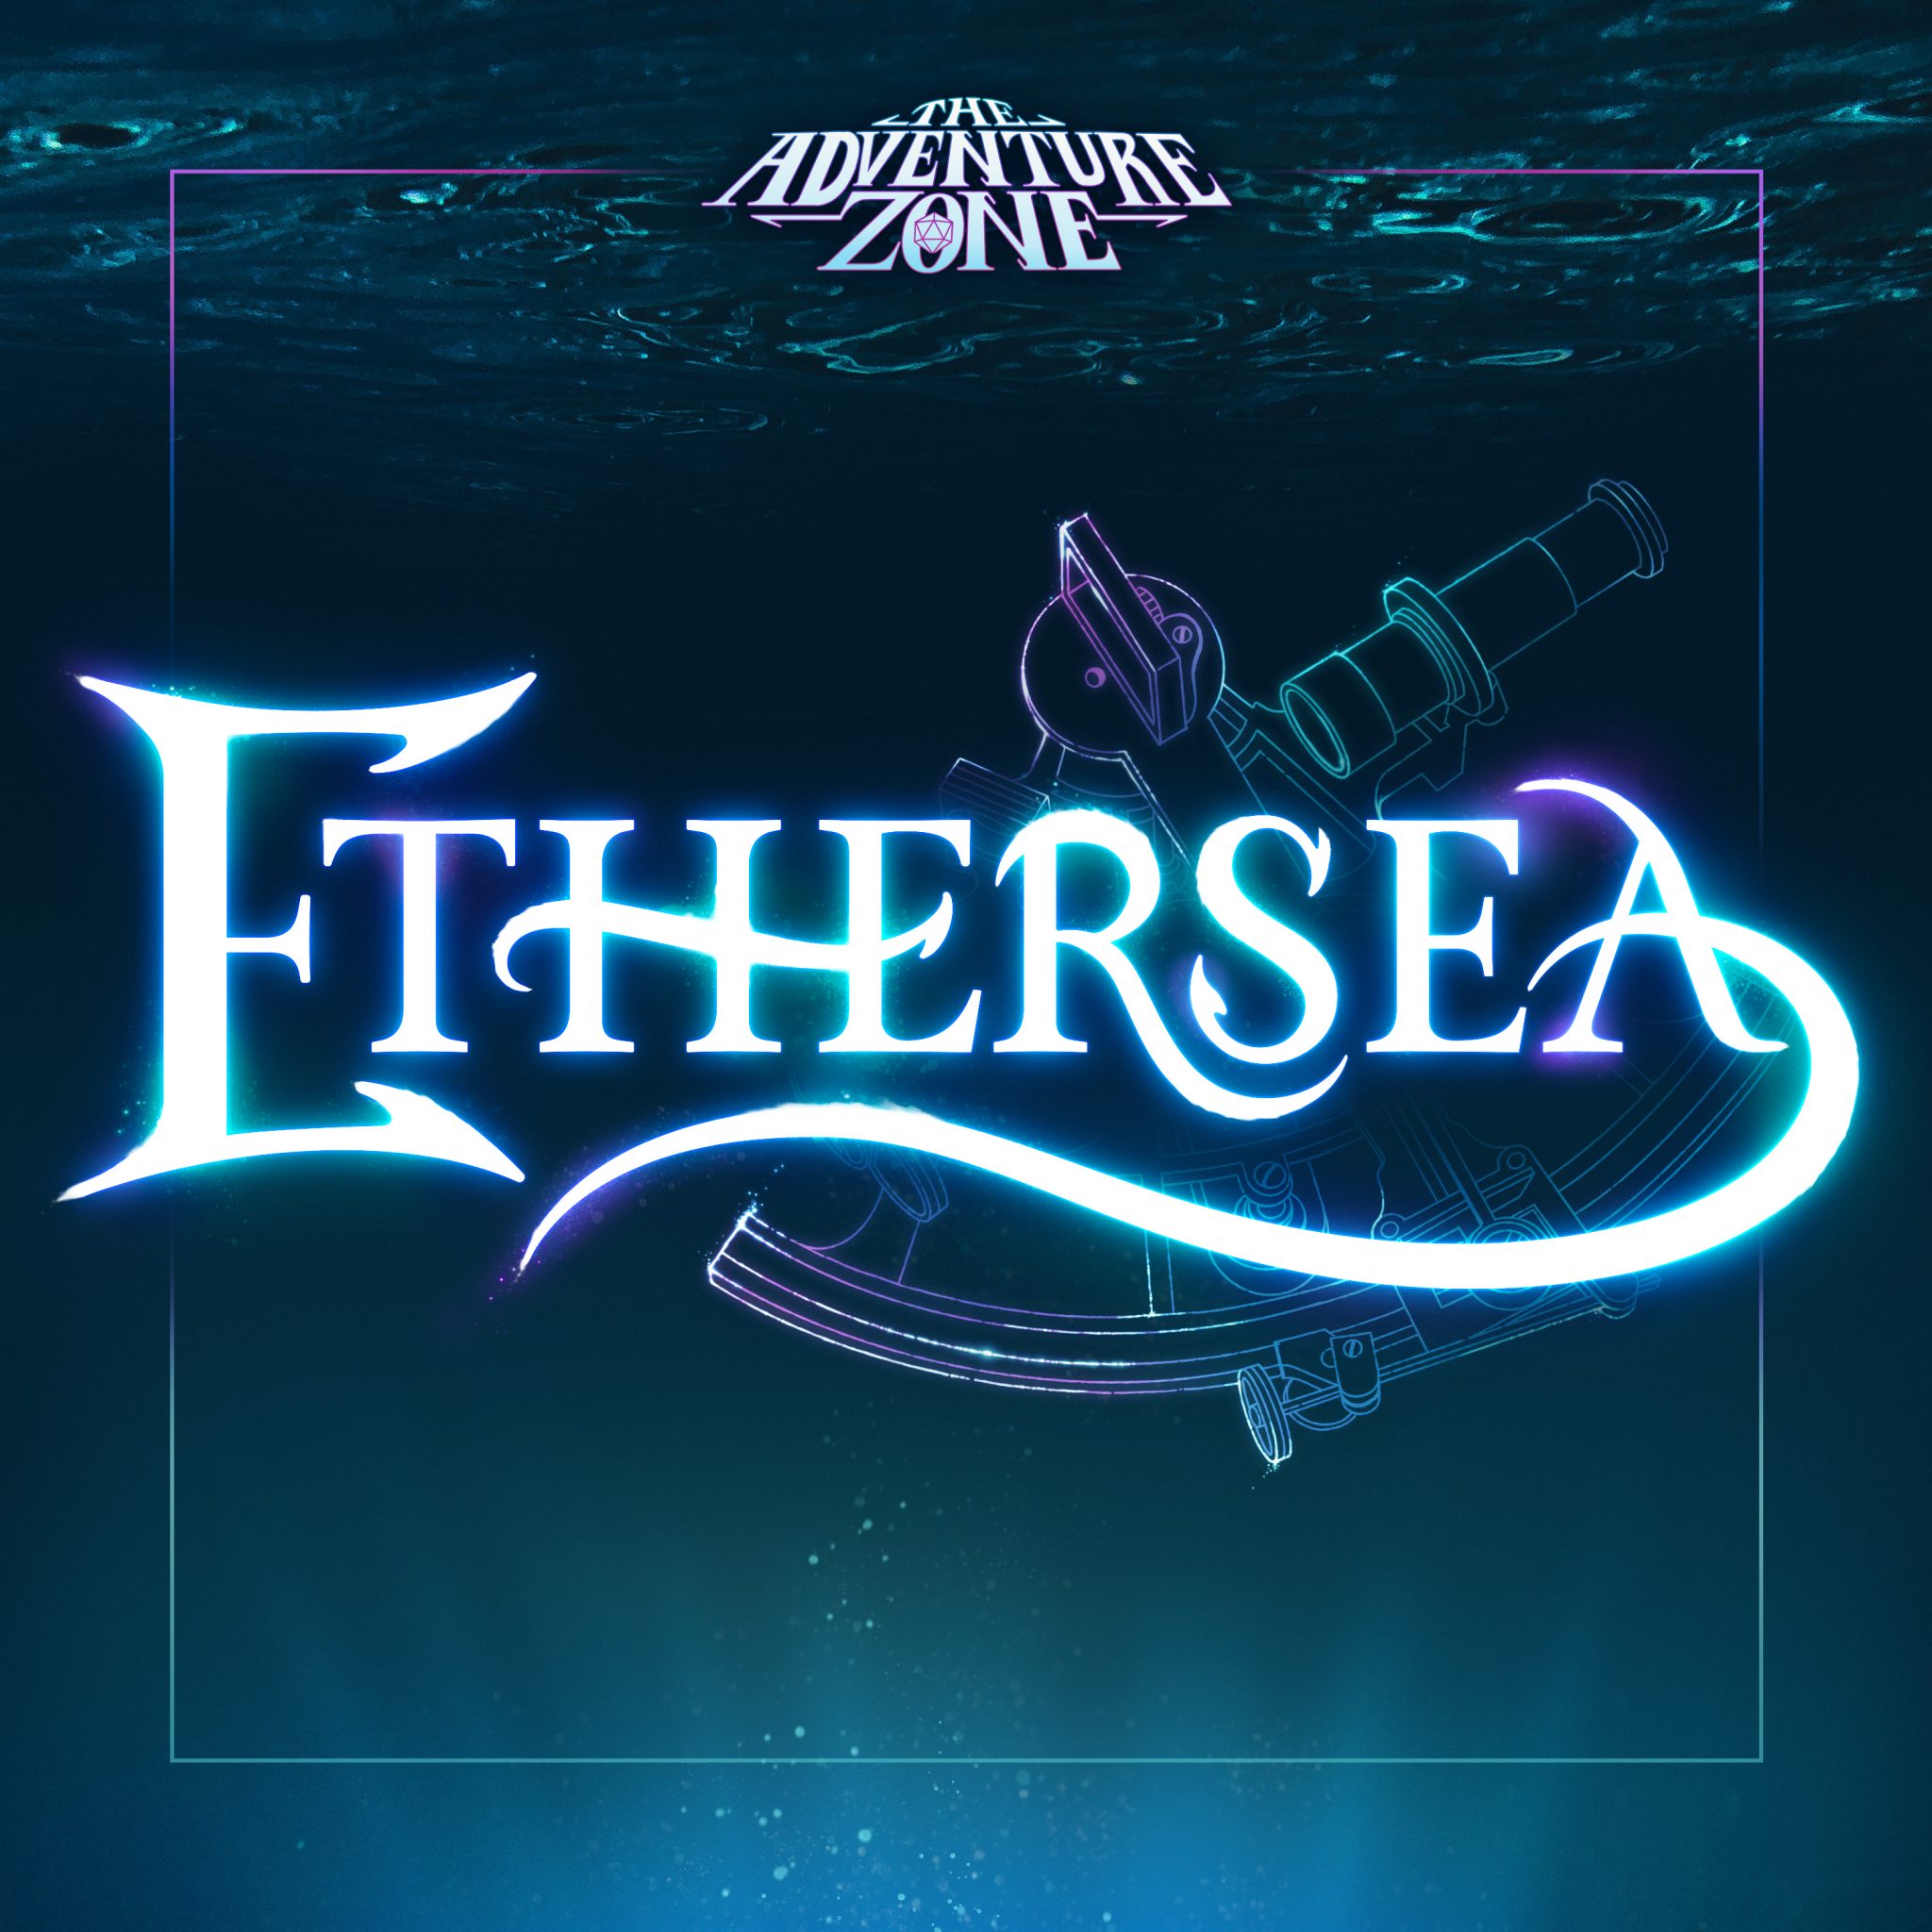 The Adventure Zone: Ethersea logo